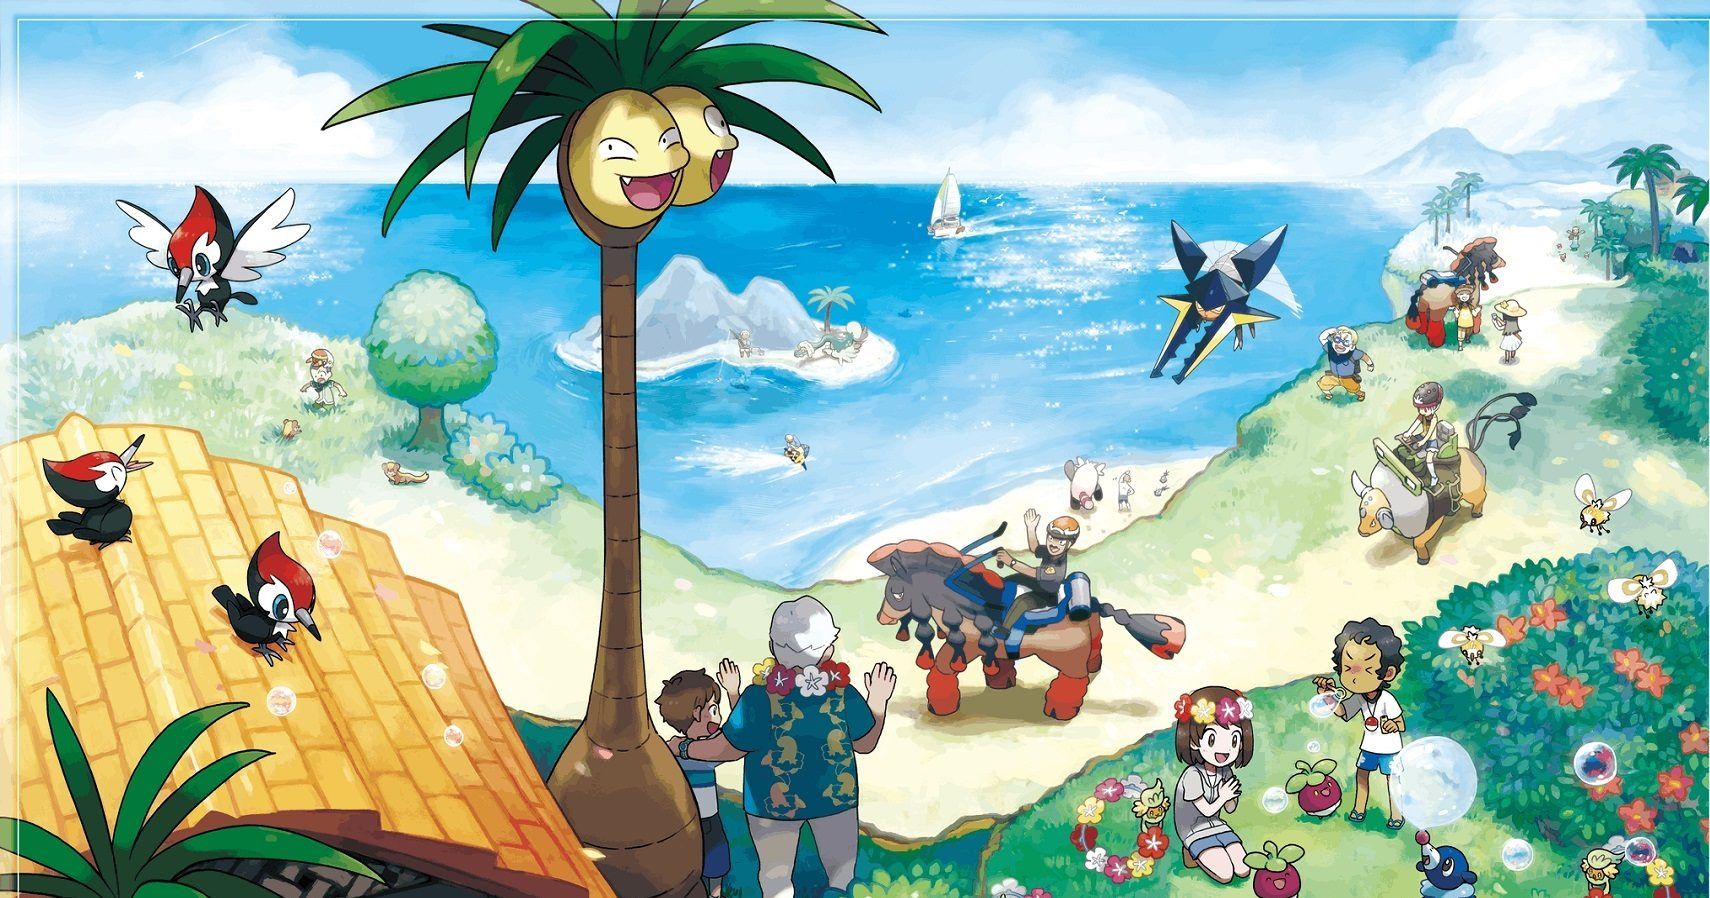 Top 12 Pokémon from the Unova Region - Prima Games